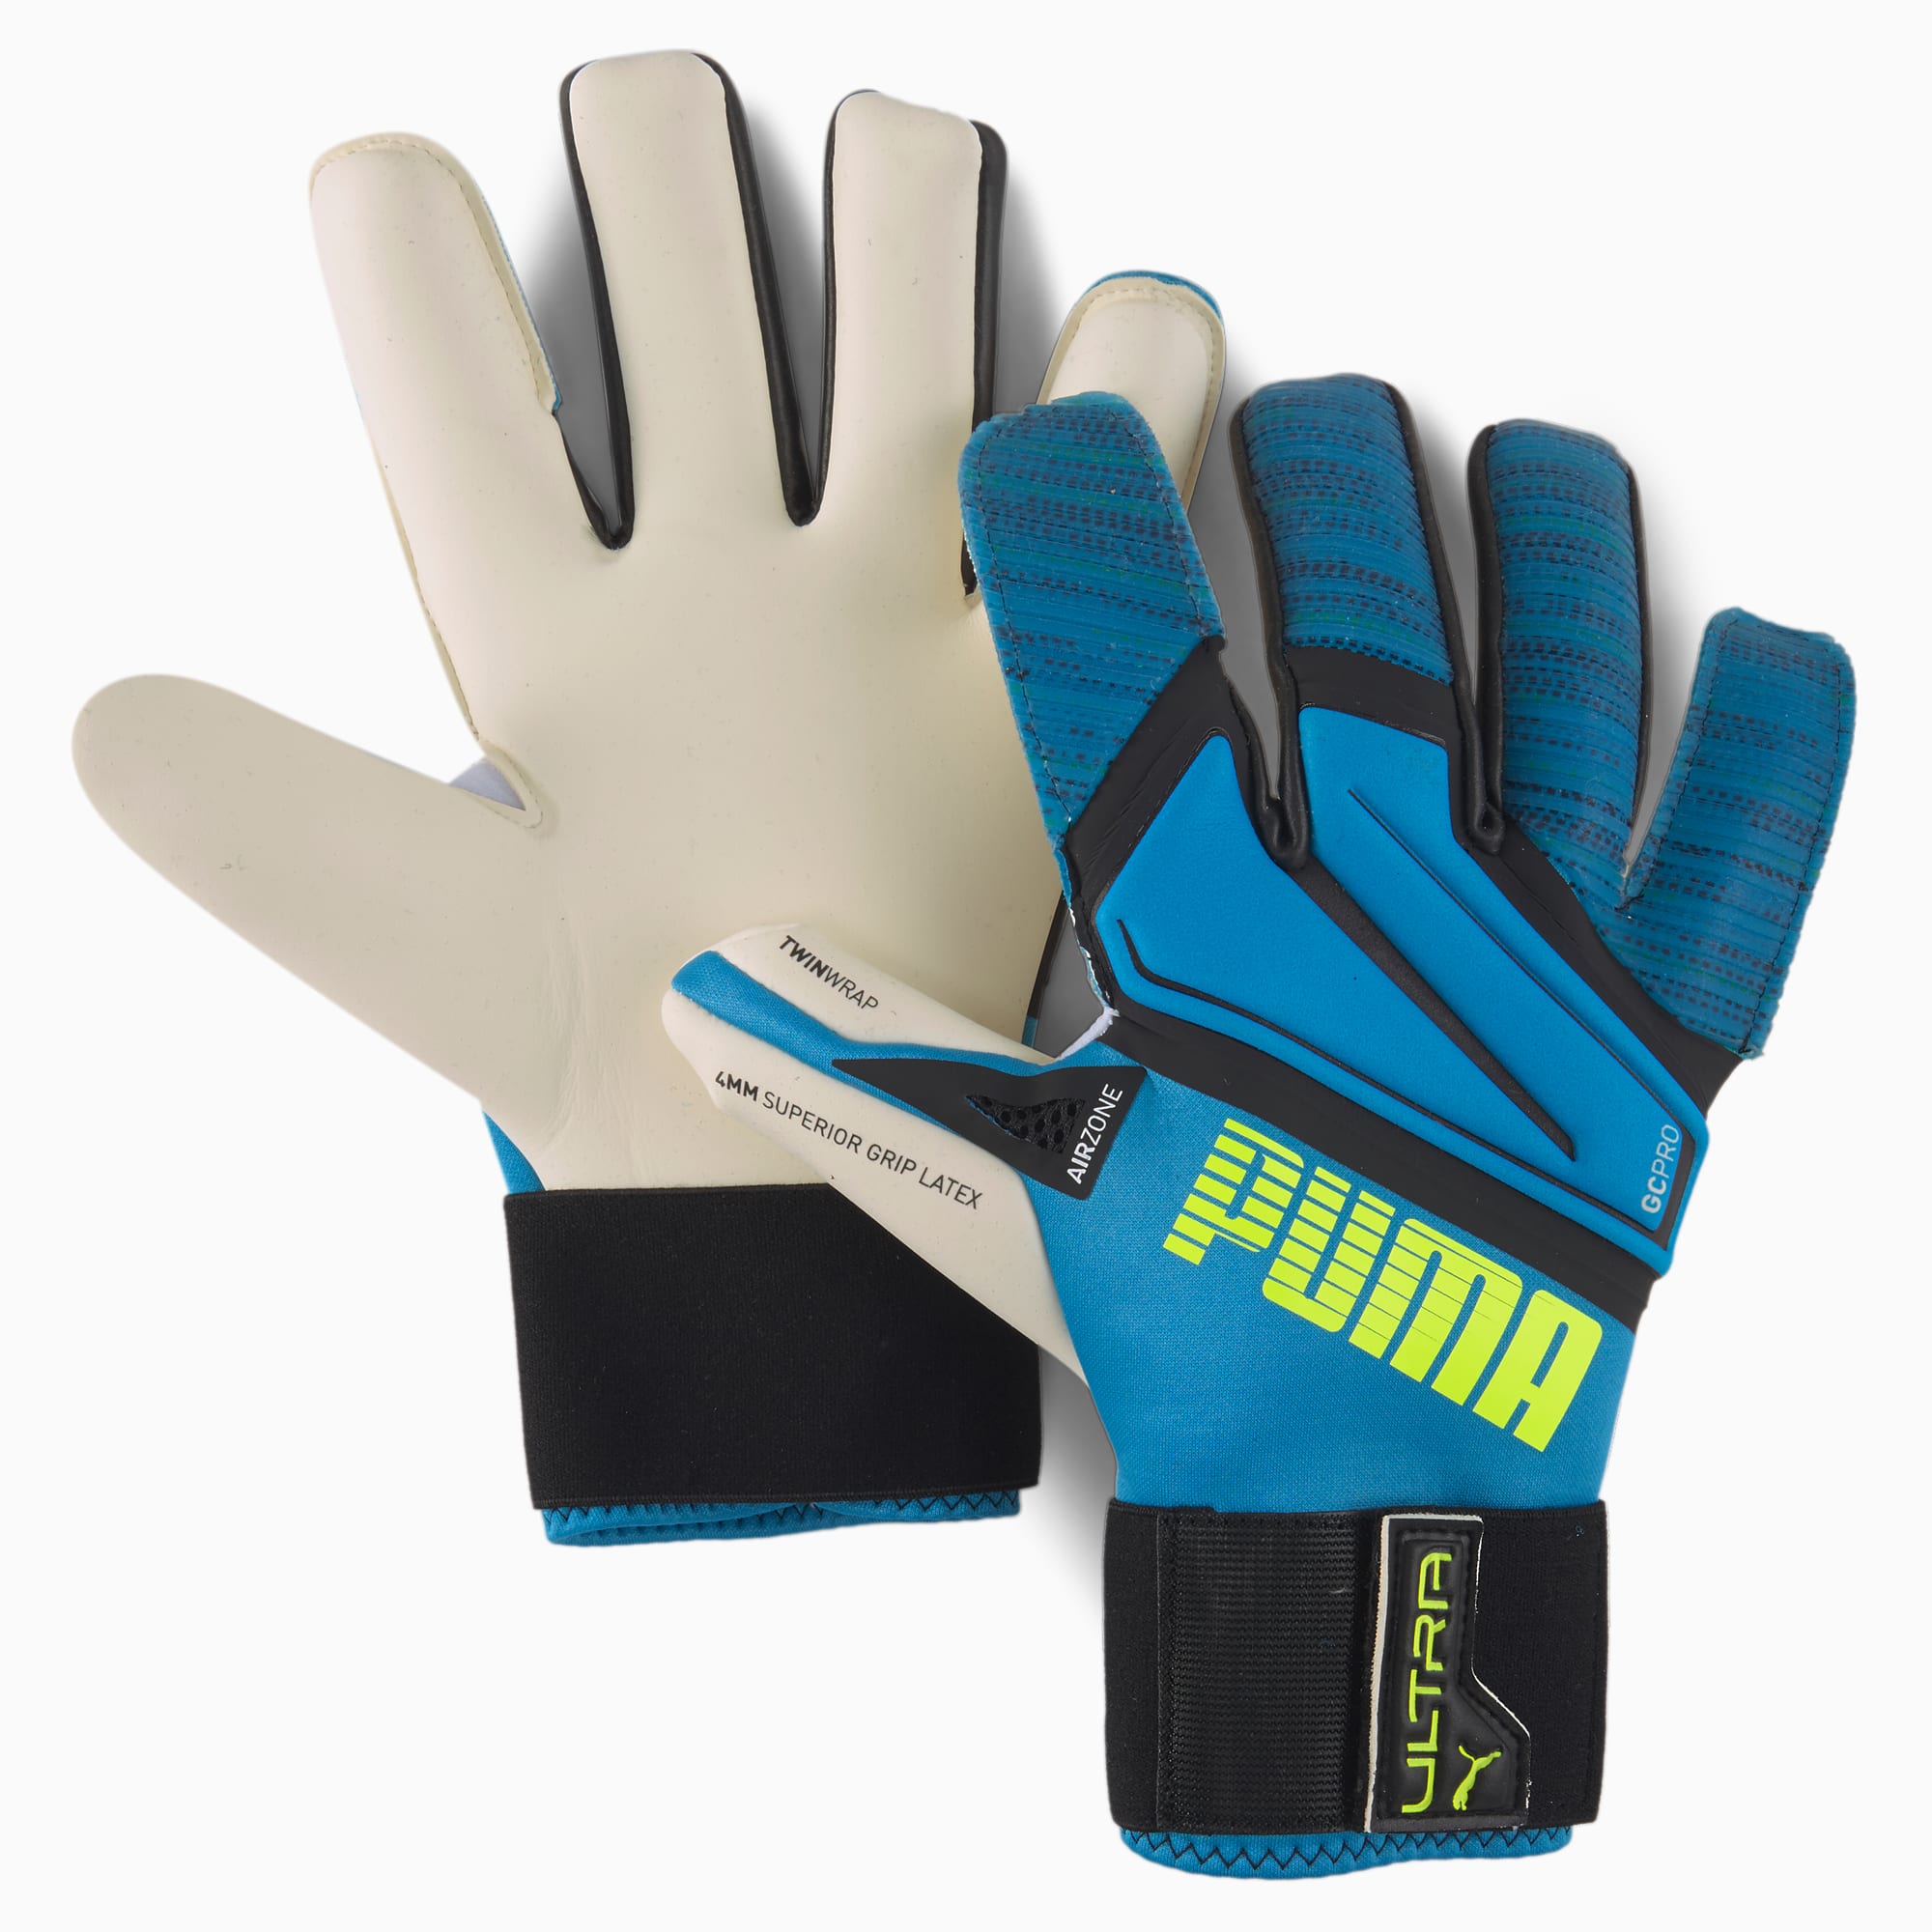 PUMA ULTRA Grip 1 Hybrid Pro keepershandschoenen, Blauw/Geel, Maat 8